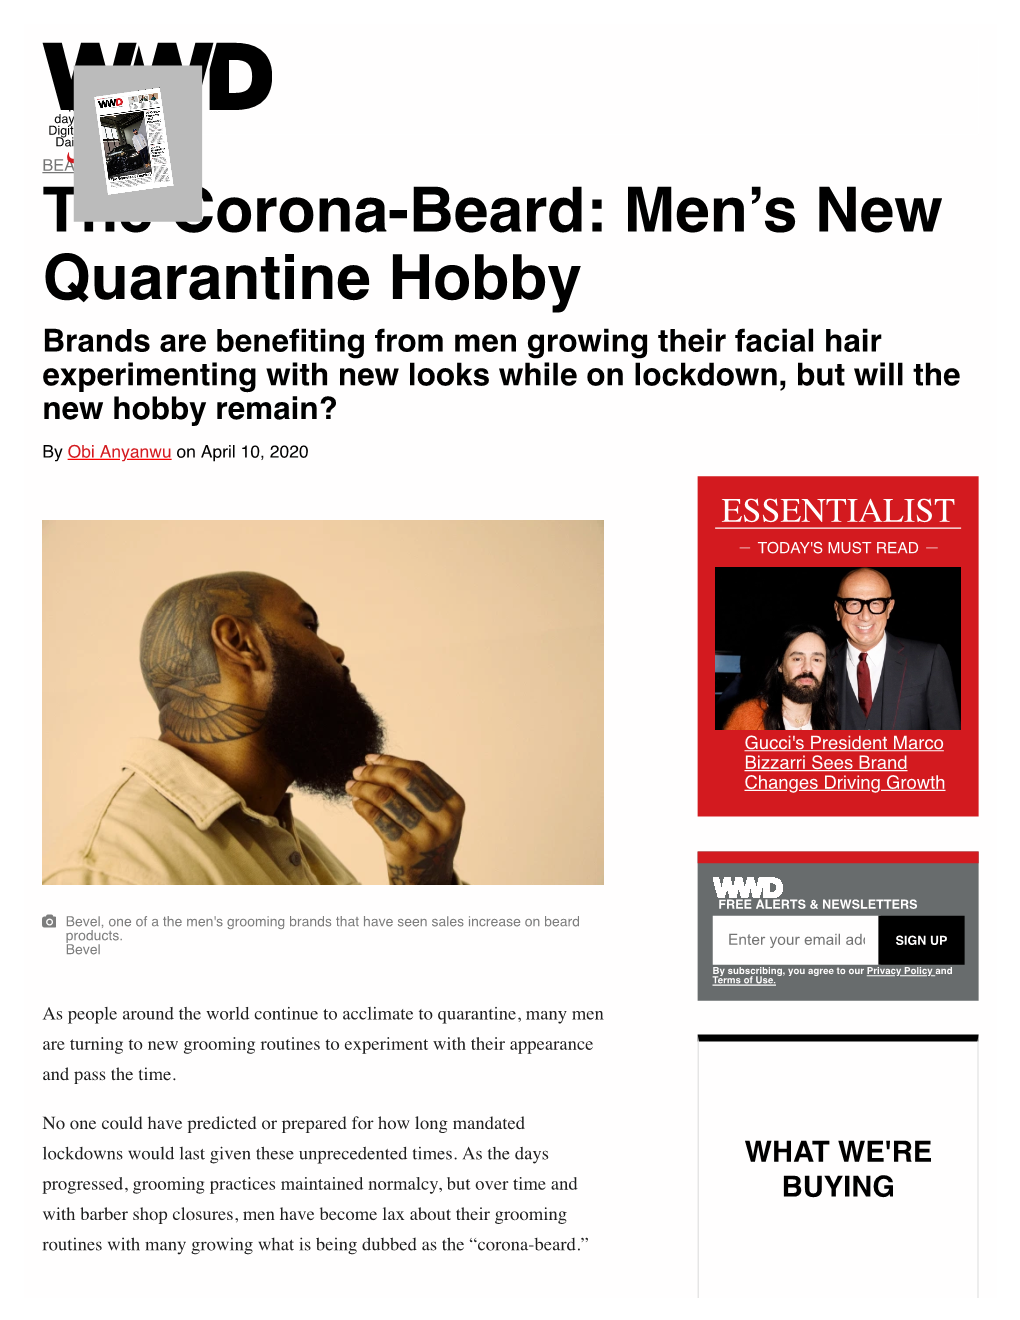 The Corona-Beard: Men's New Quarantine Hobby